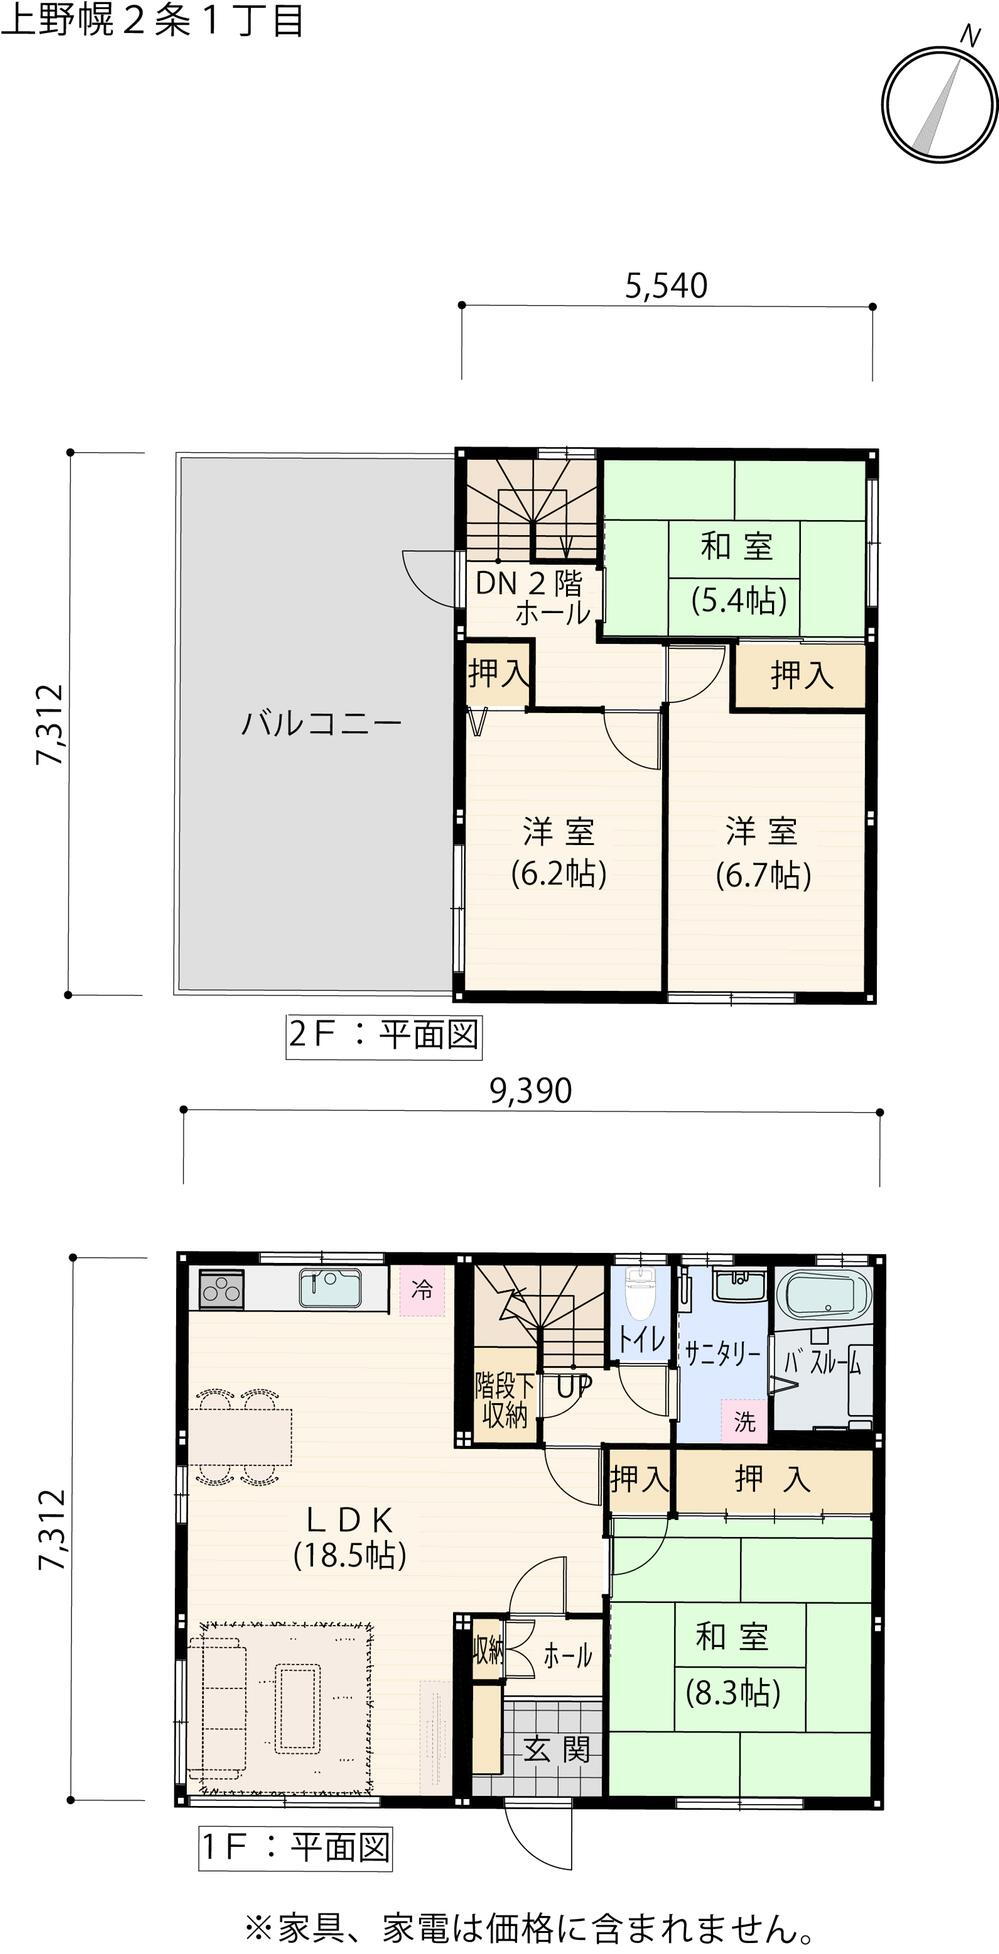 『Ｂｅハイム』札幌市厚別区上野幌２条１丁目 2730万円、4LDK、土地面積209.99m<sup>2</sup>、建物面積131.81m<sup>2</sup> LDK18.5帖の大空間＋和室。お客様のご希望に合わせた改築が可能な物件となっております。